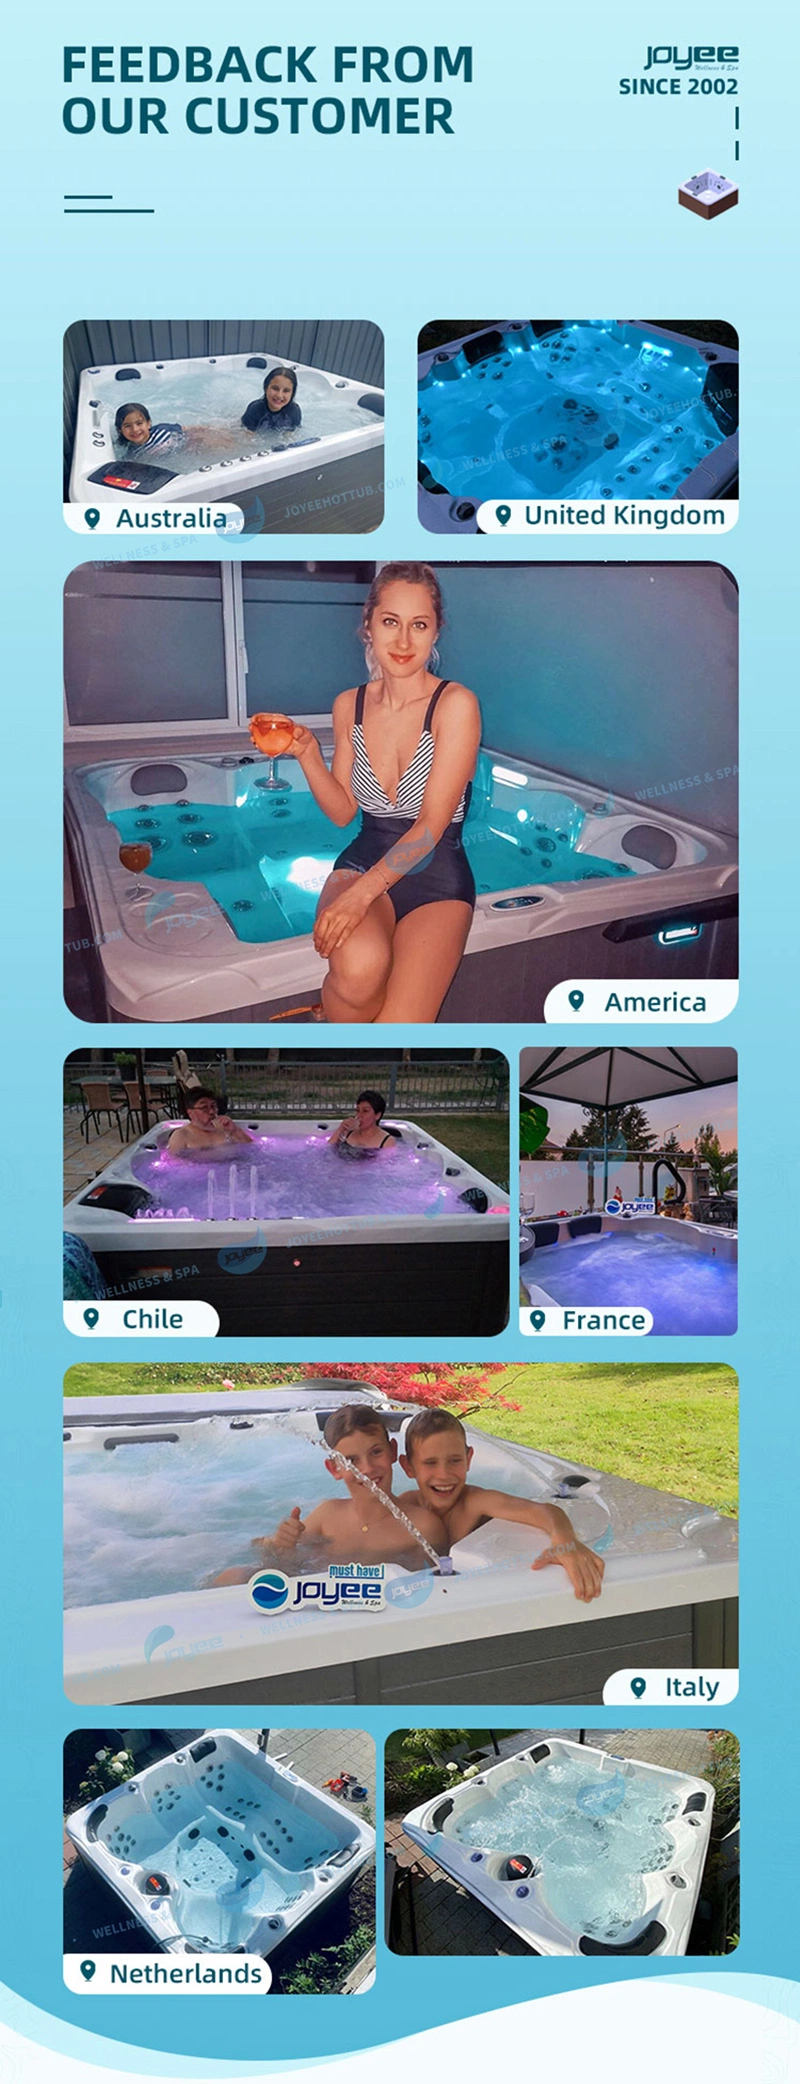 Joyee Massage Jet Whirlpool Hot Acrylic Bath Tub with Pillows